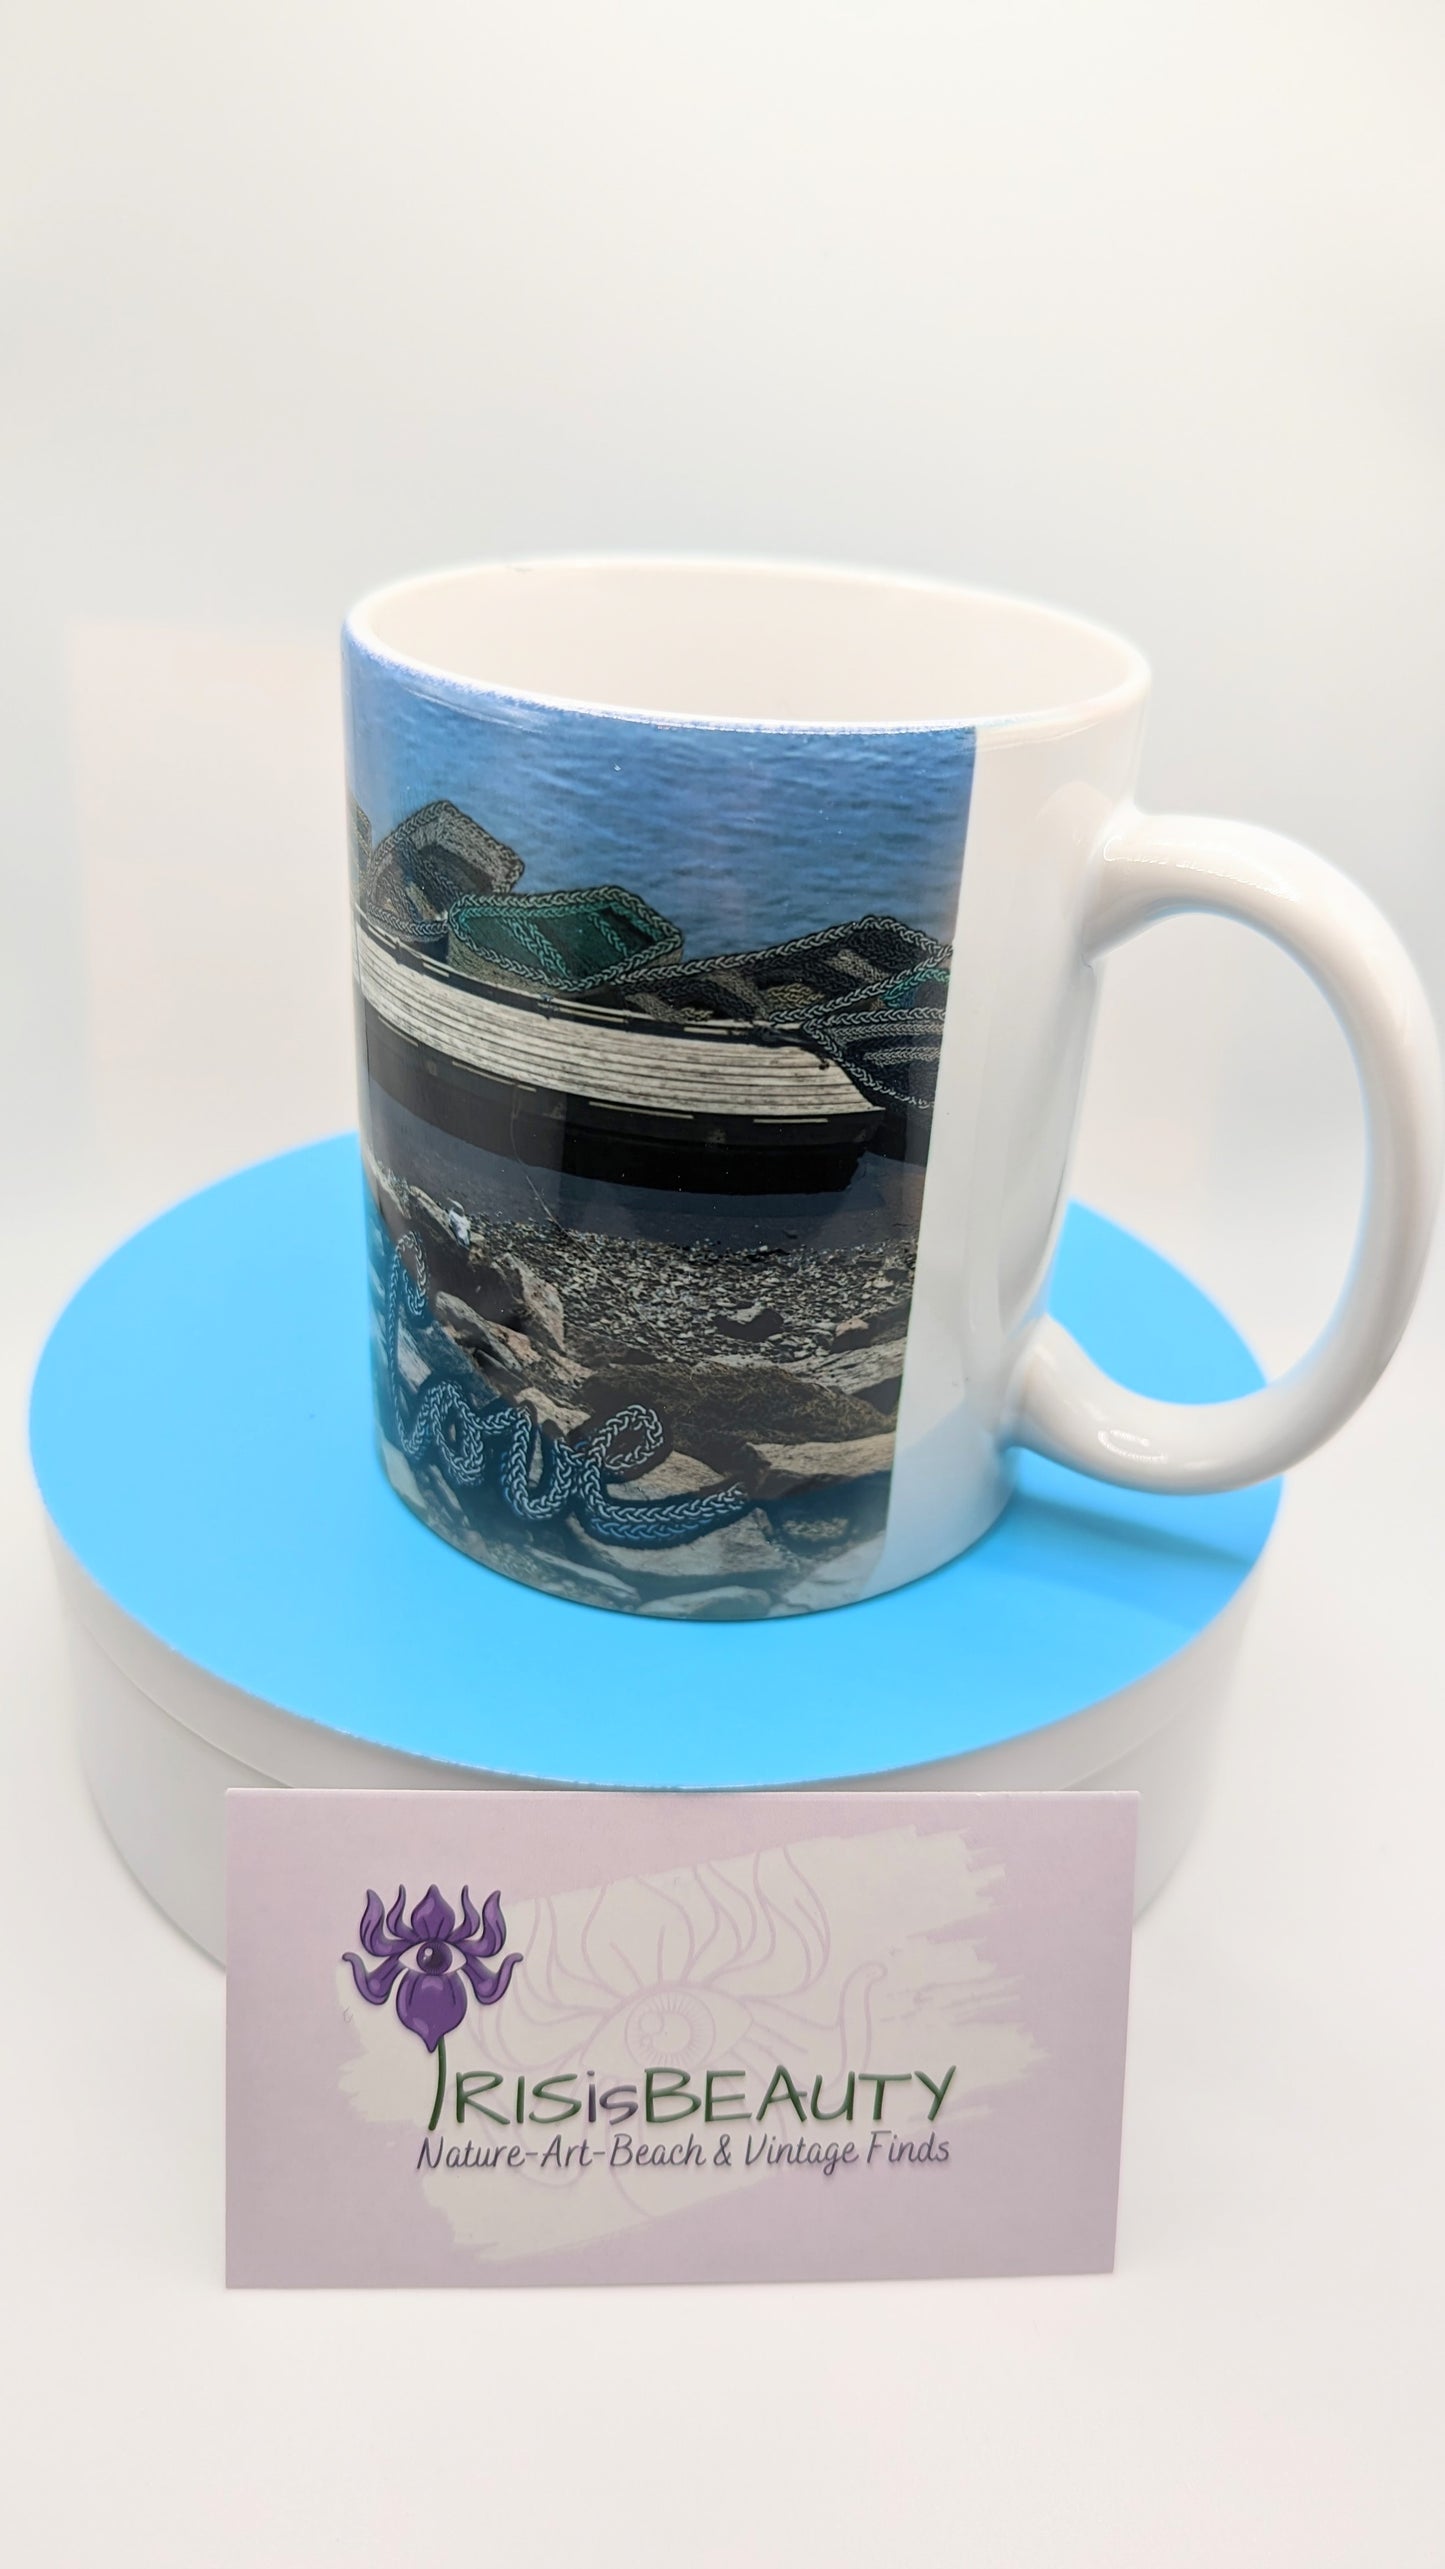 Perkins Cove mug, photo image with digital rope art design boats, Ogunquit Maine, art by IRISisBEAUTY